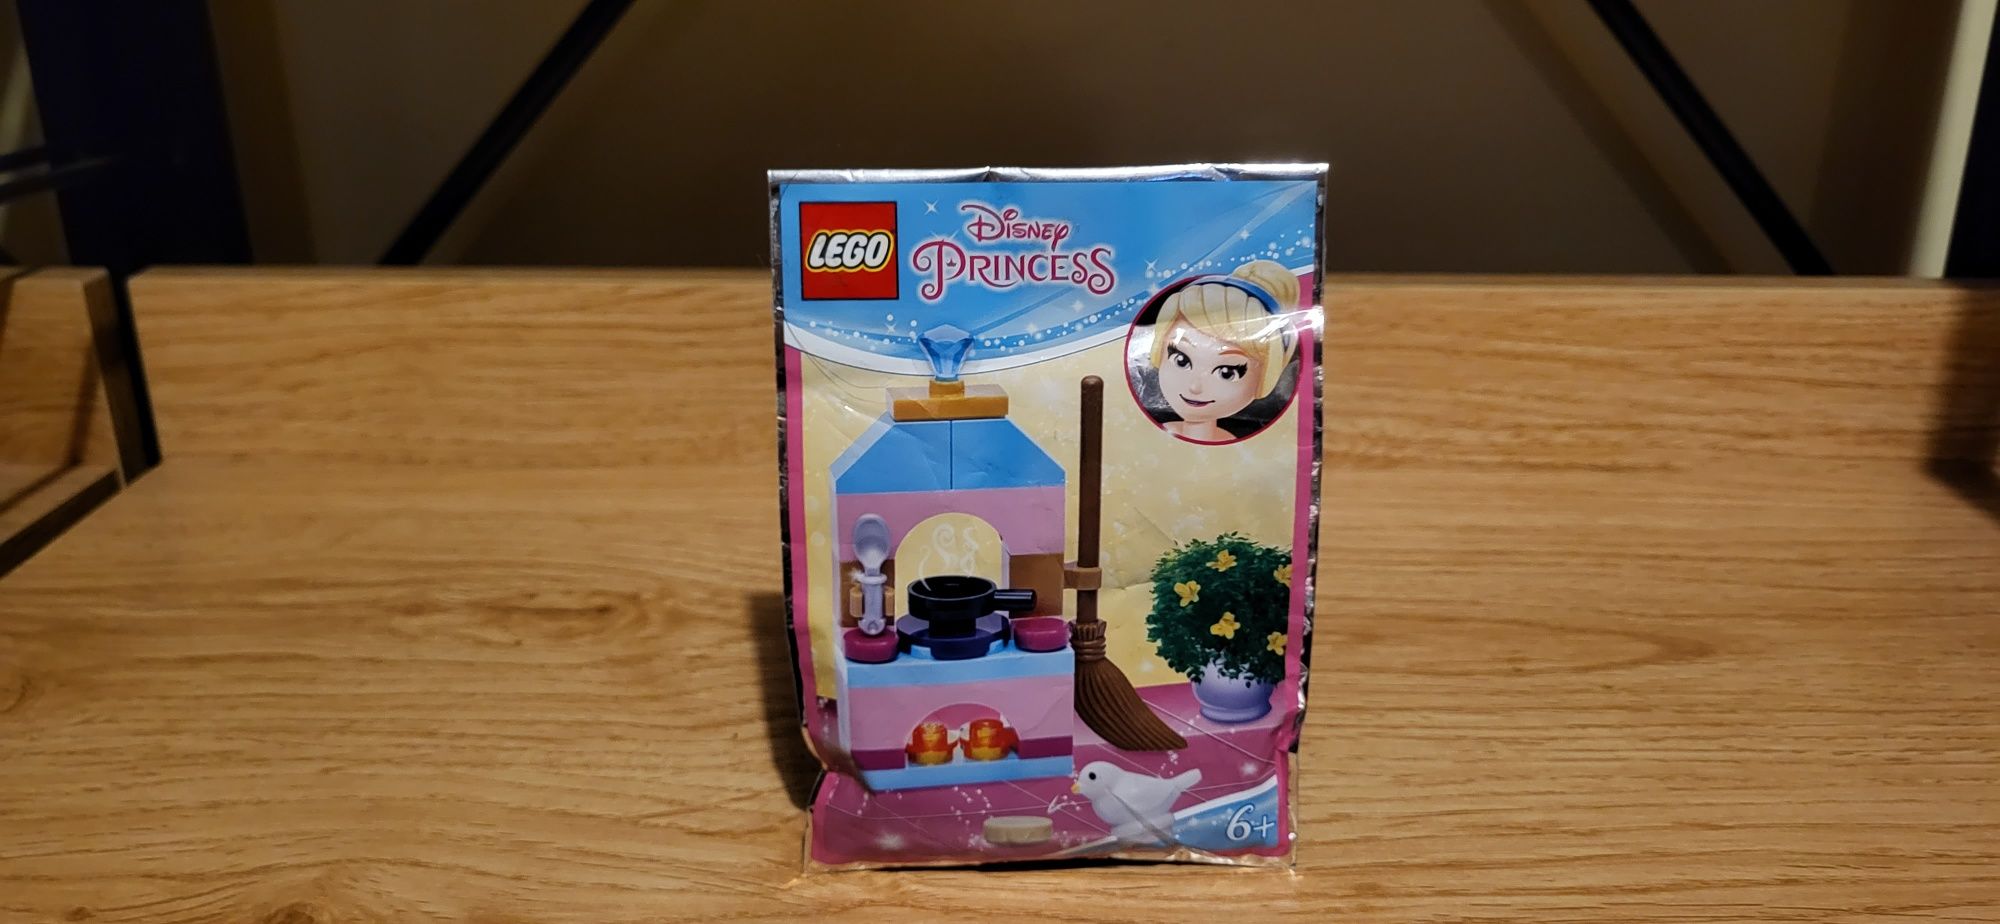 Lego disney Princess 302103 Kuchnia Kopciuszka saszetka z klockami